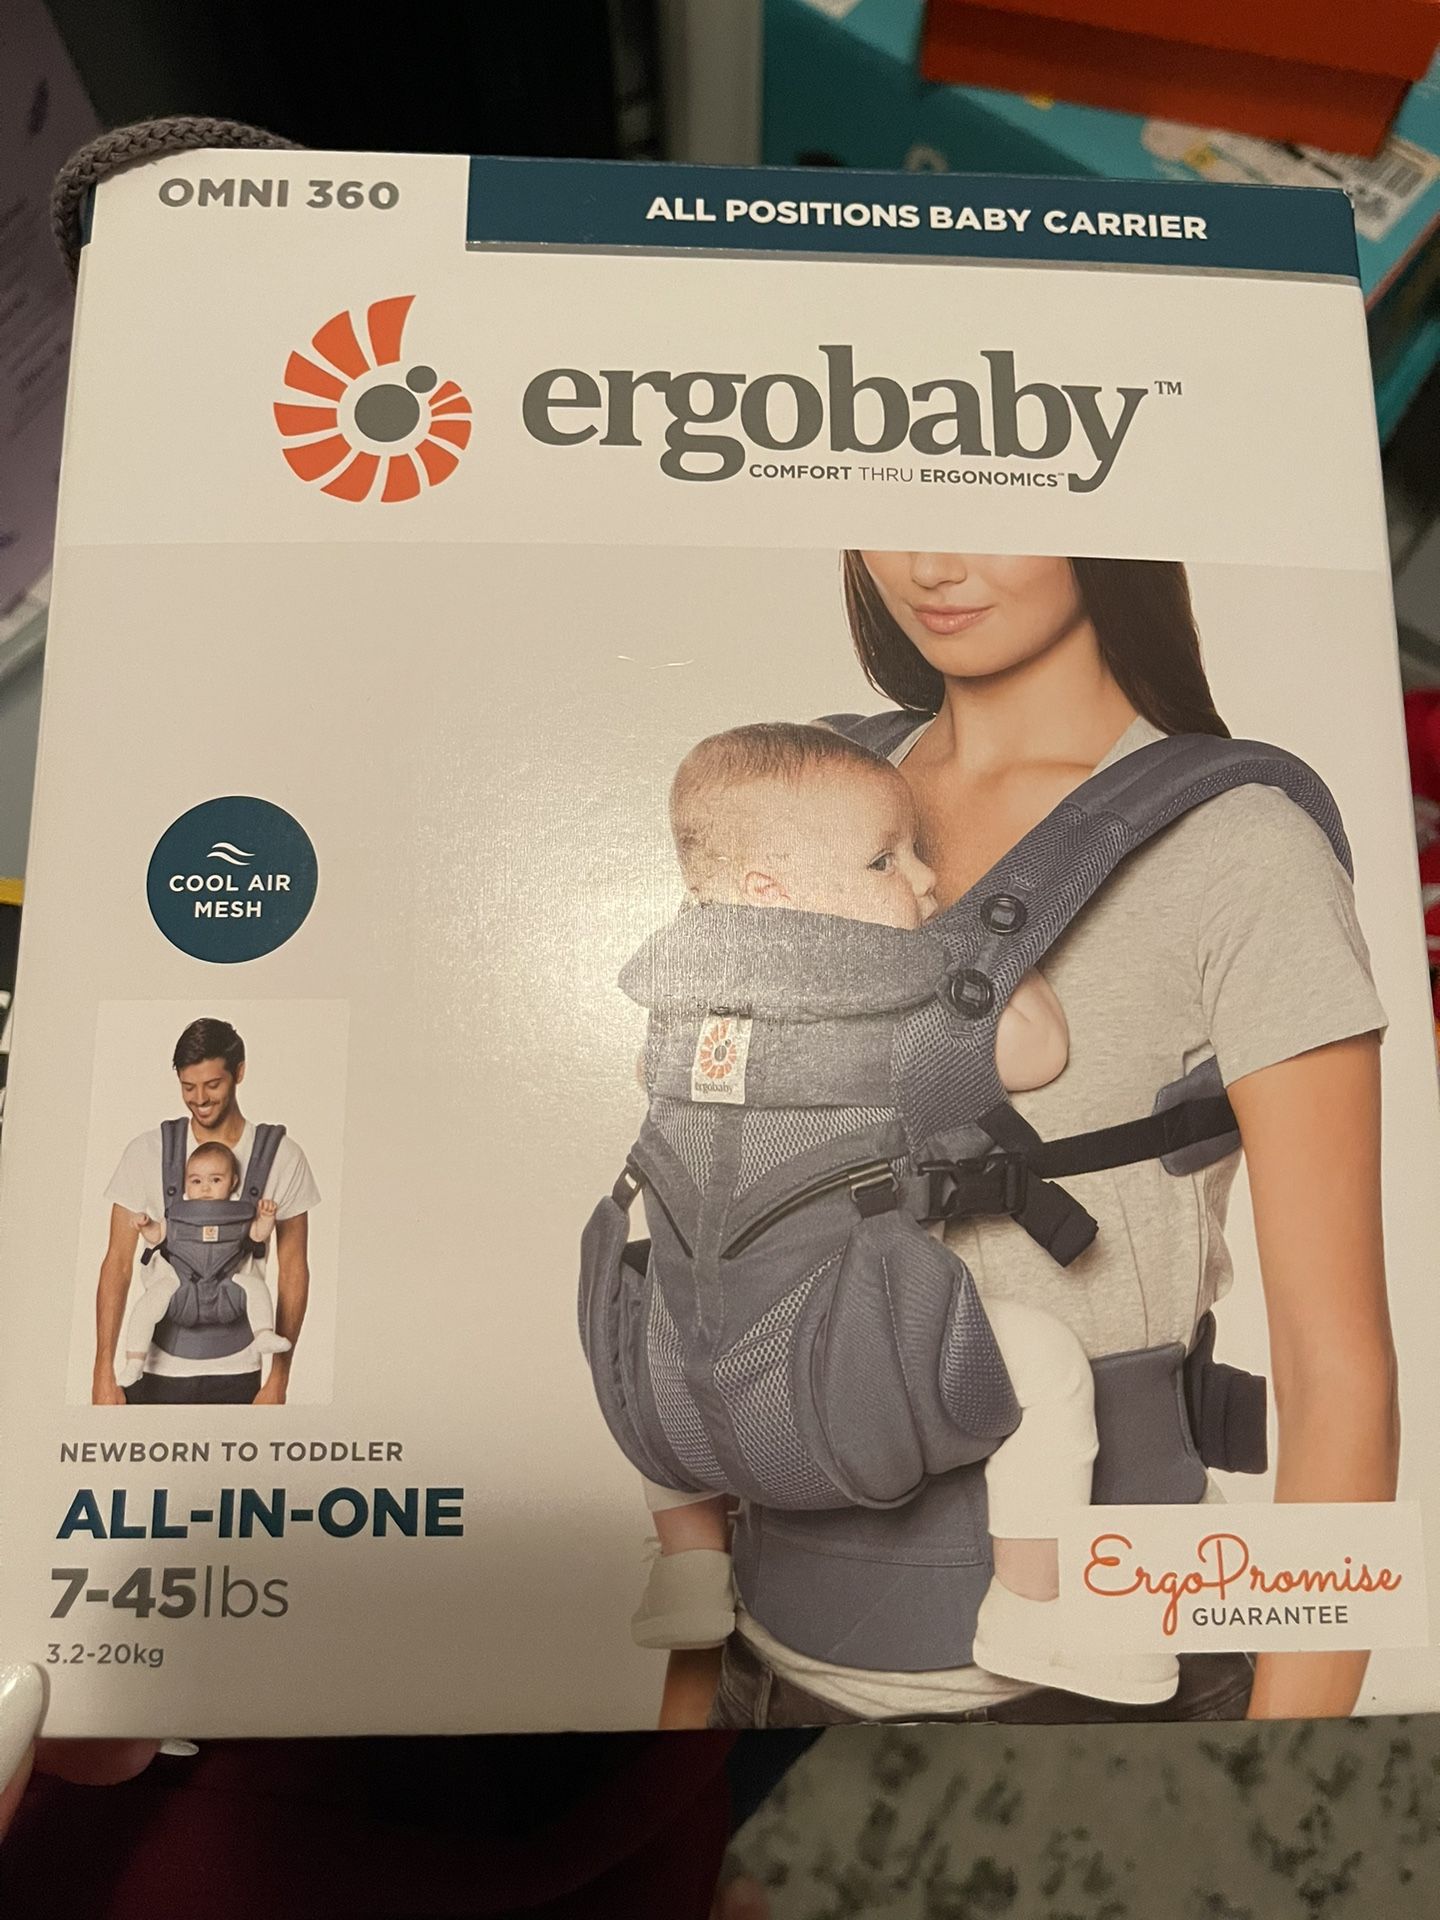 Ergo baby baby carrier